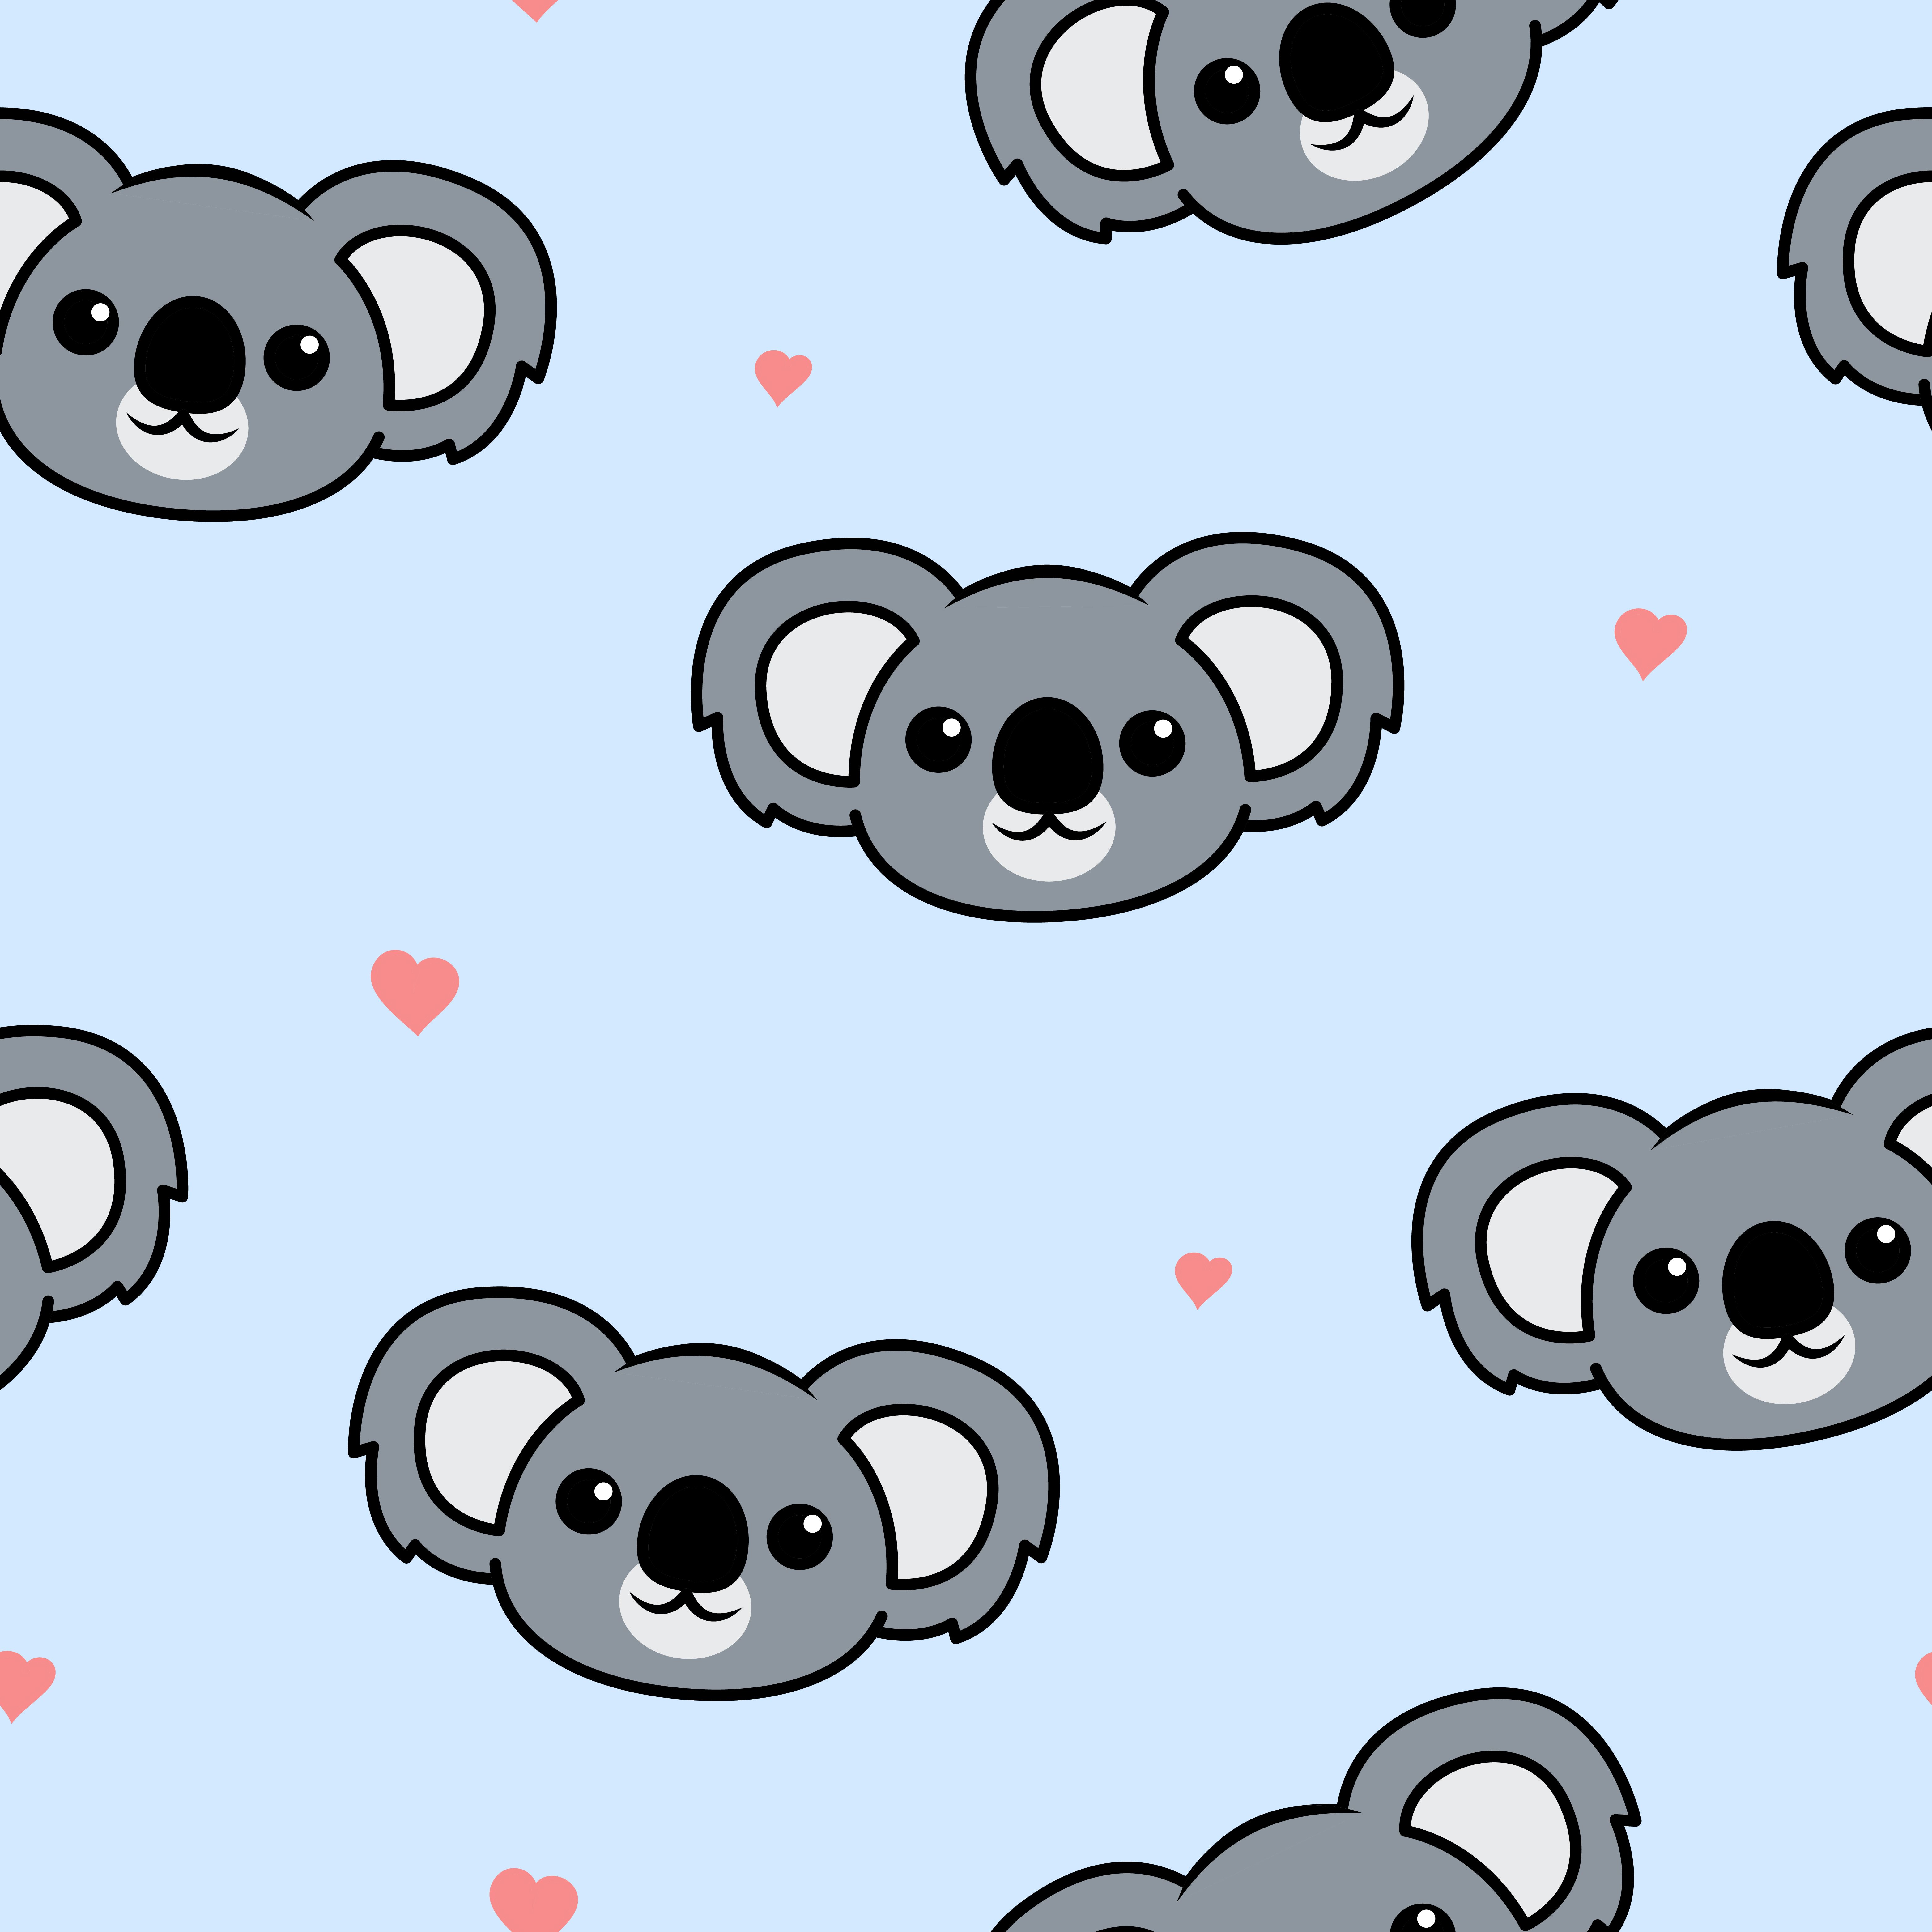 Cute koala face cartoon seamless pattern Free Vectors, Clipart Graphics & Vector Art